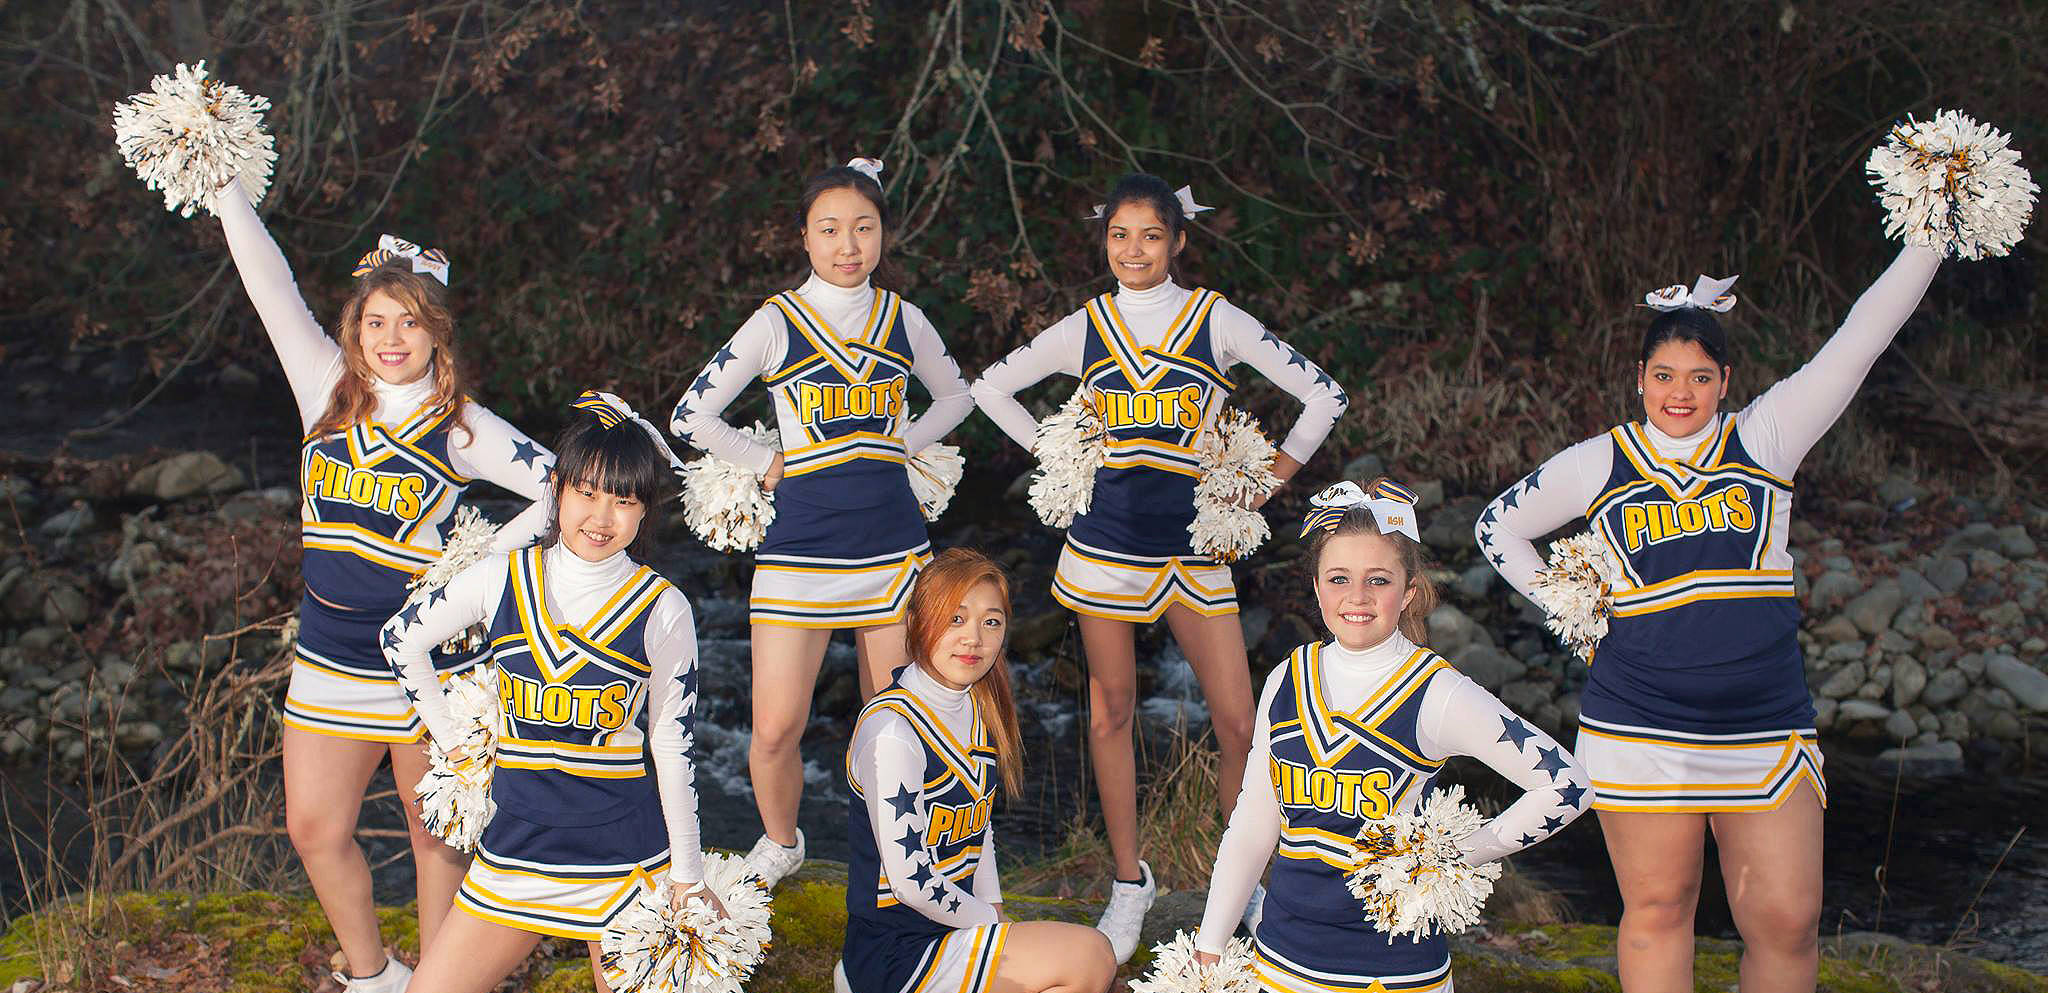 Private school cheerleading squad.